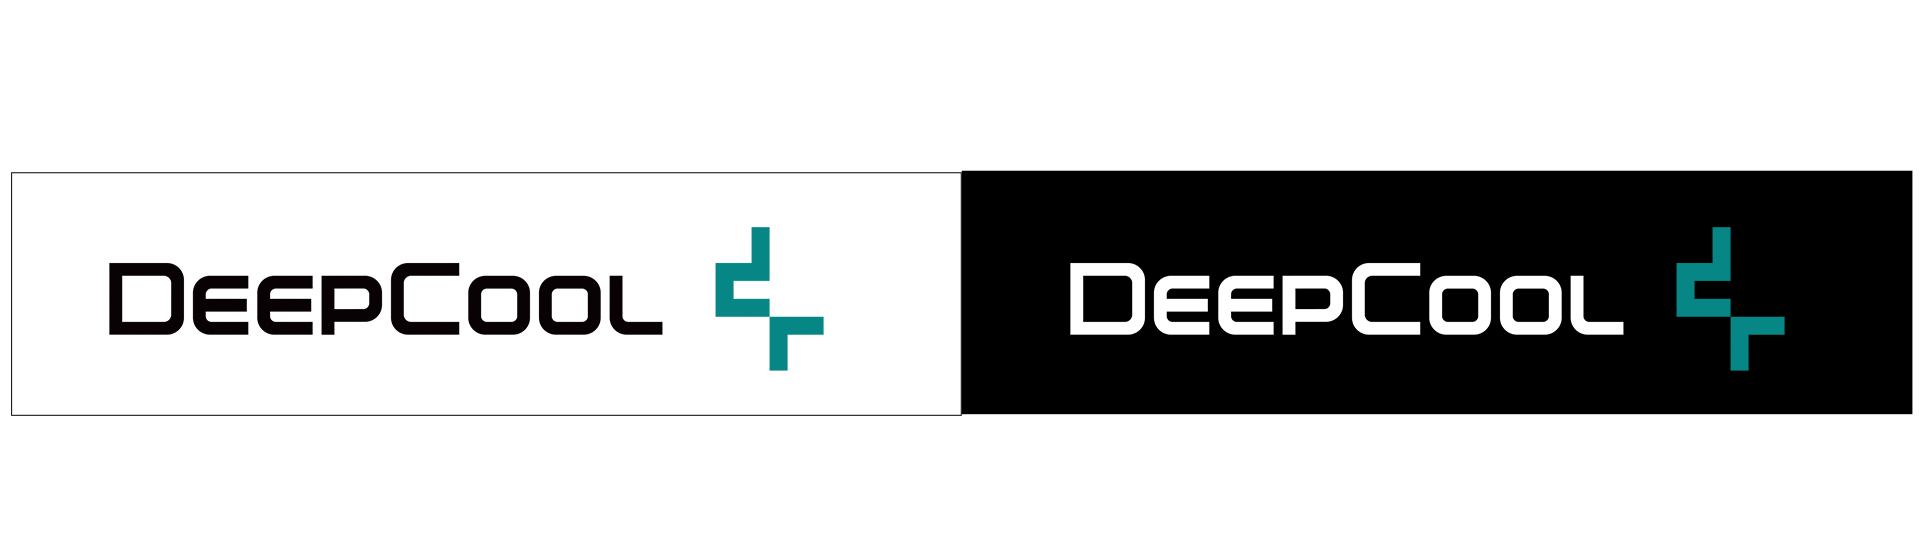 DeepCool New Logo 2 7370b